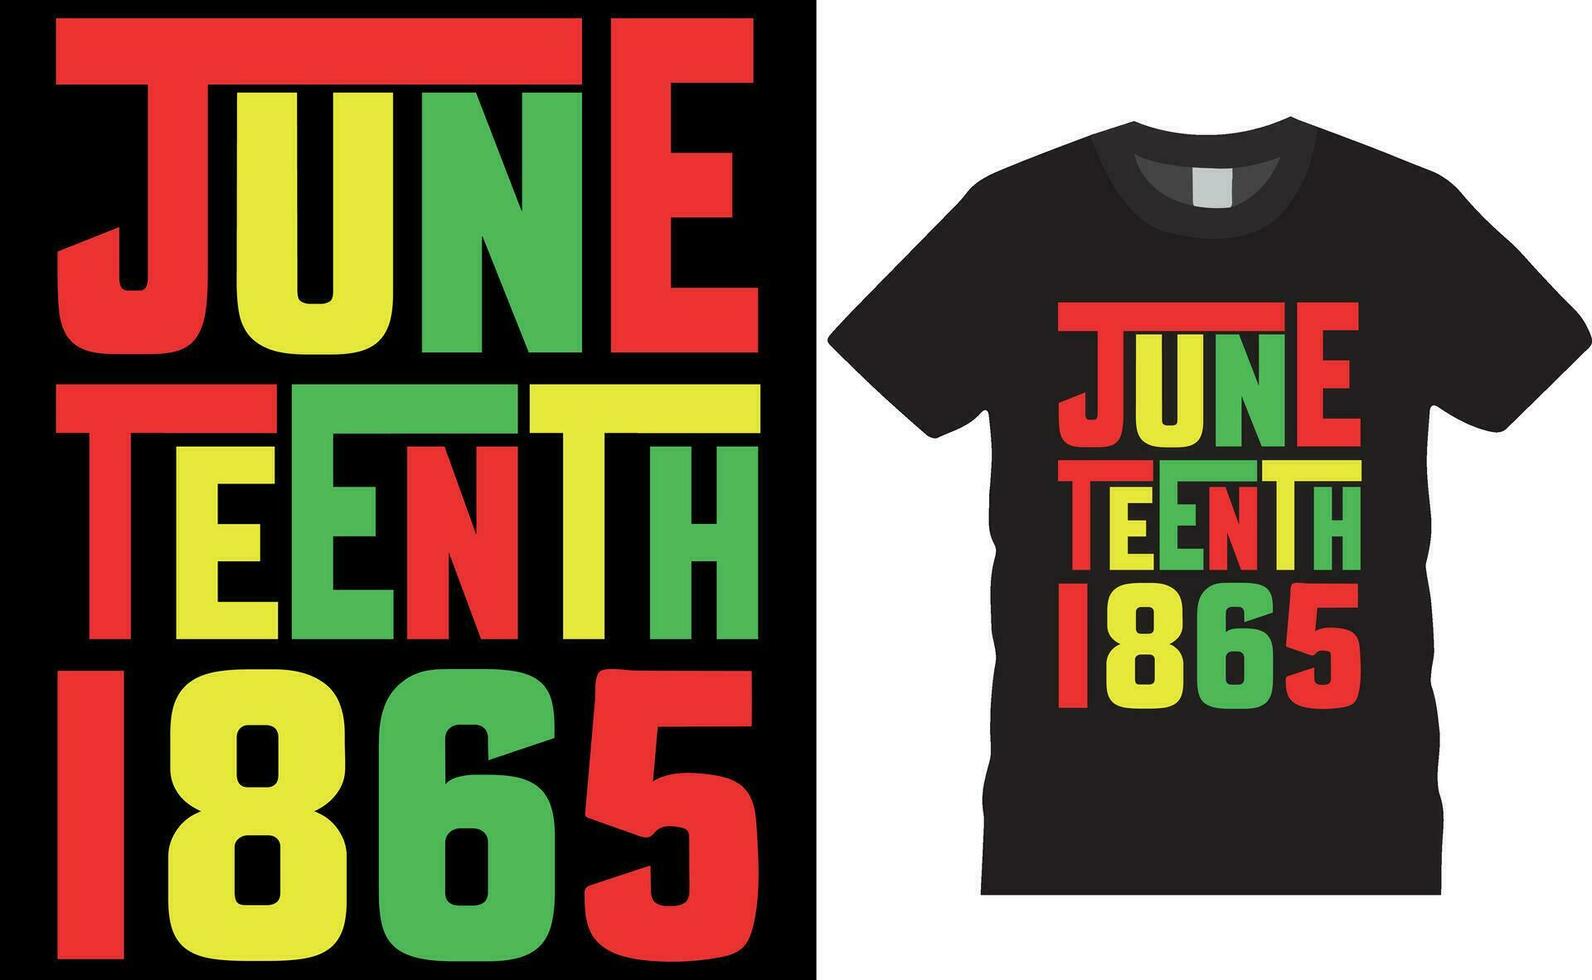 Juneteenth June 19, 1865, typography T-shirt Design.Juneteenth 1865, vector